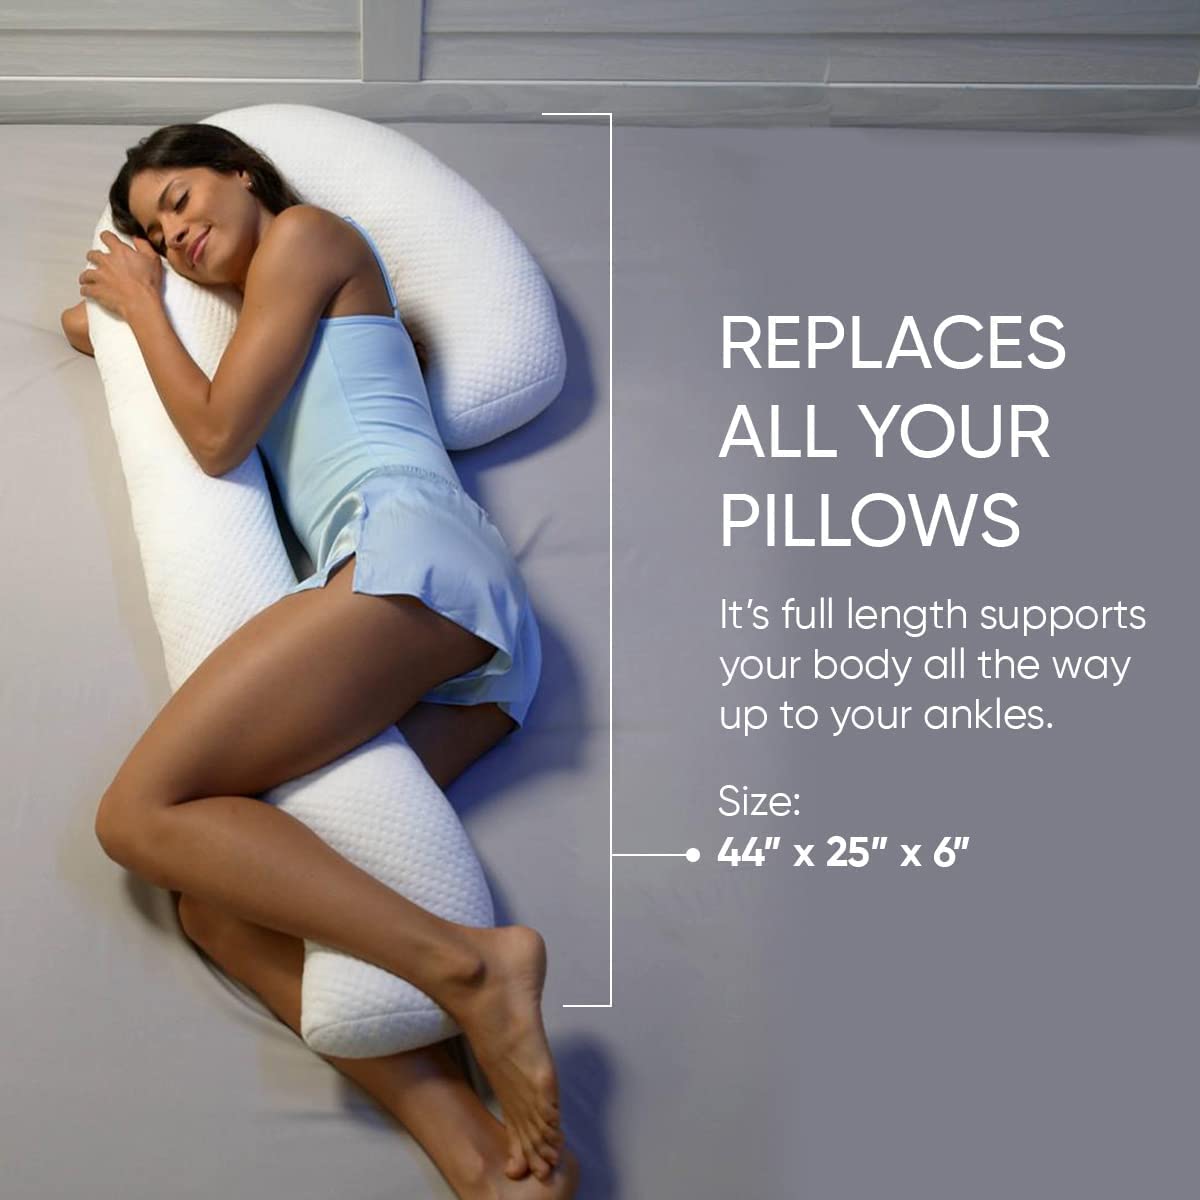  Contour Swan Body Pillow w/Pillowcase & Mesh Laundry